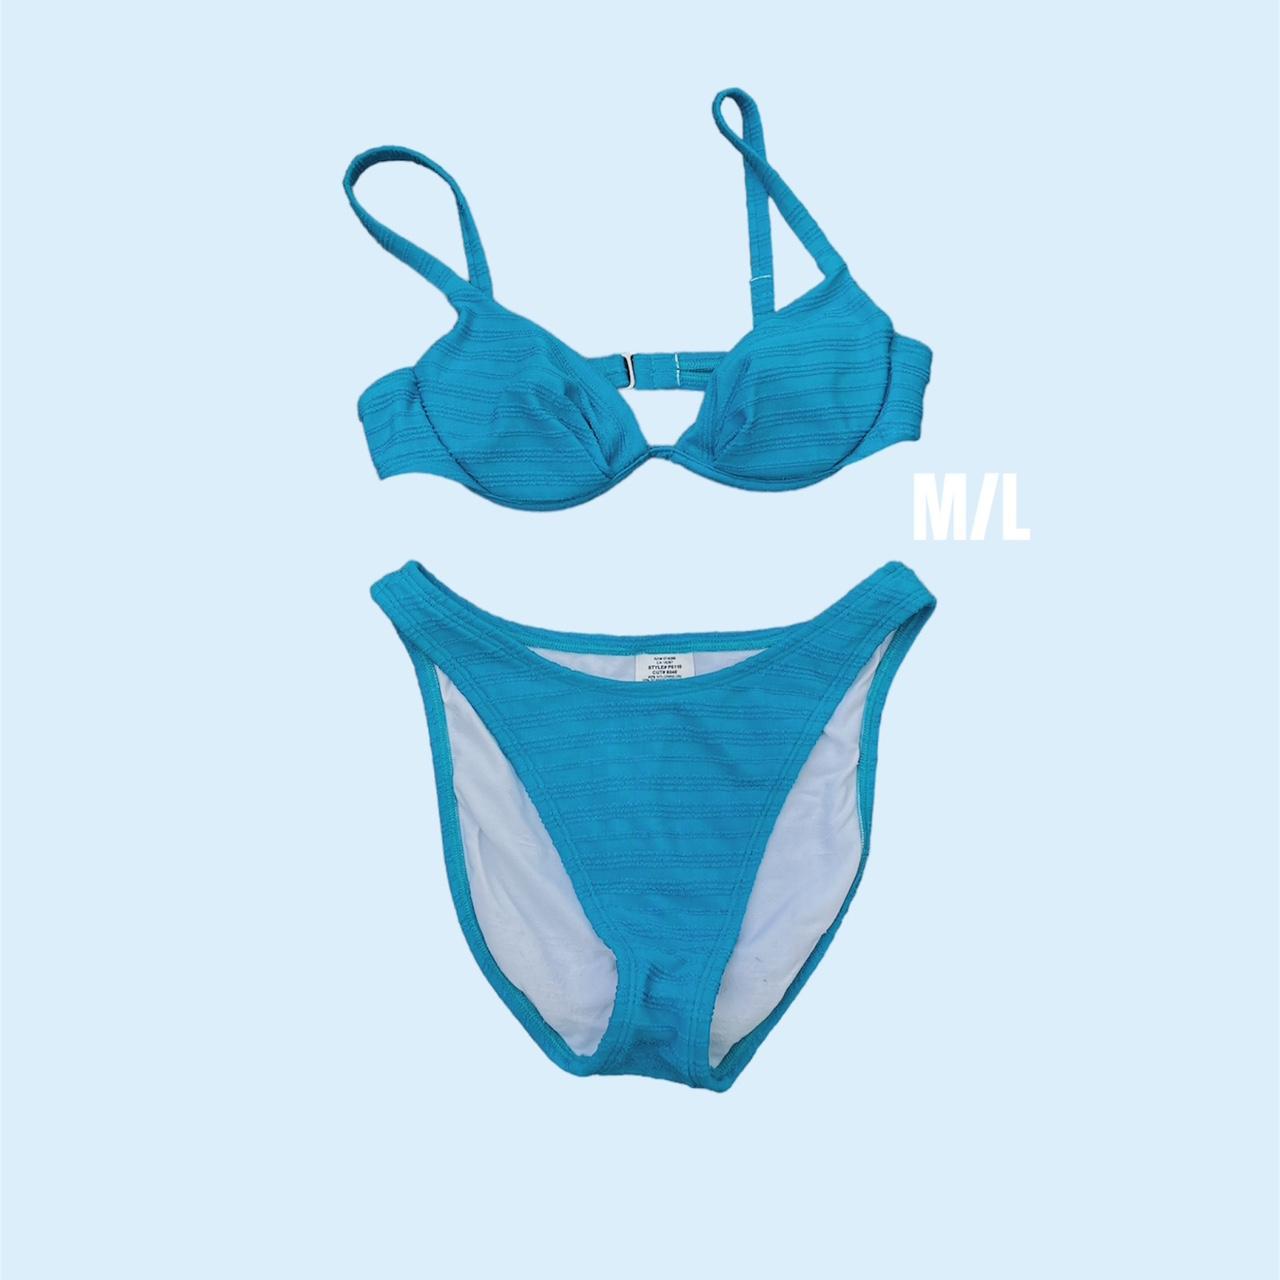 JAG Women's Blue Bikinis-and-tankini-sets